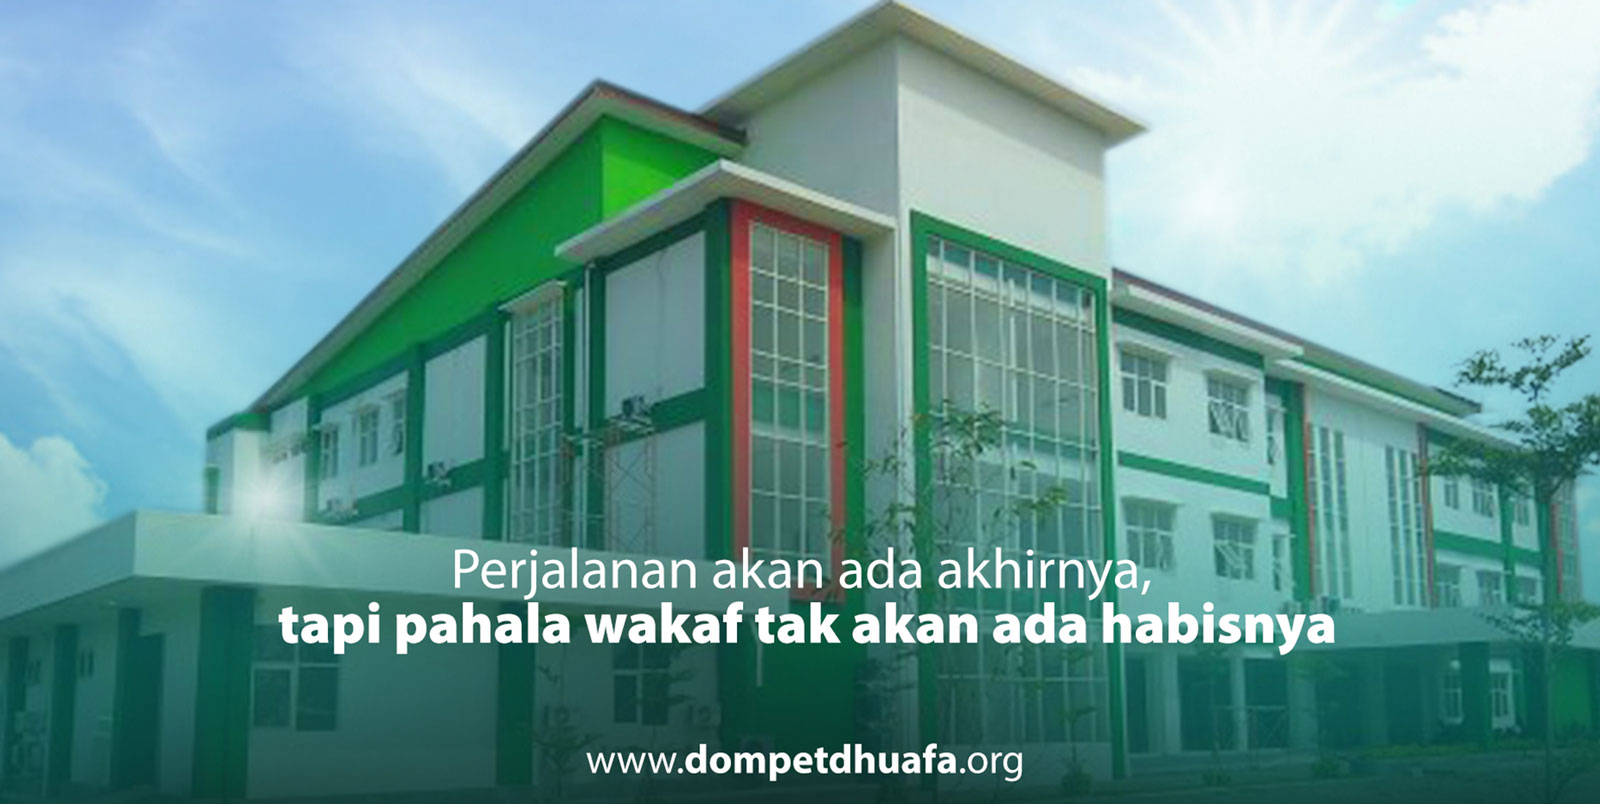 wakaf khadijah learning center dompet dhuafa